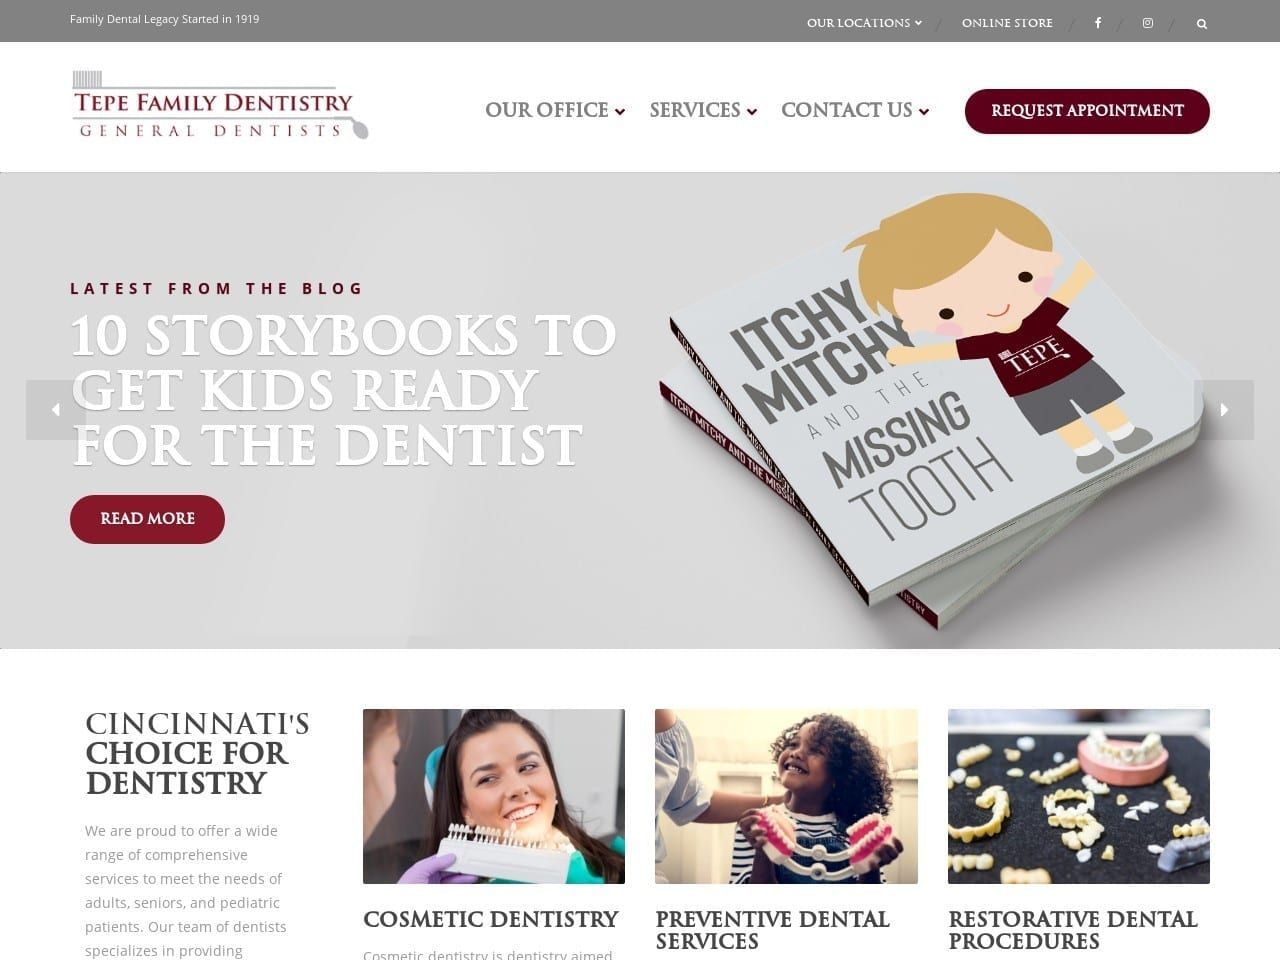 Tepe Family Dentistry Website Screenshot from tepefamilydentistry.com